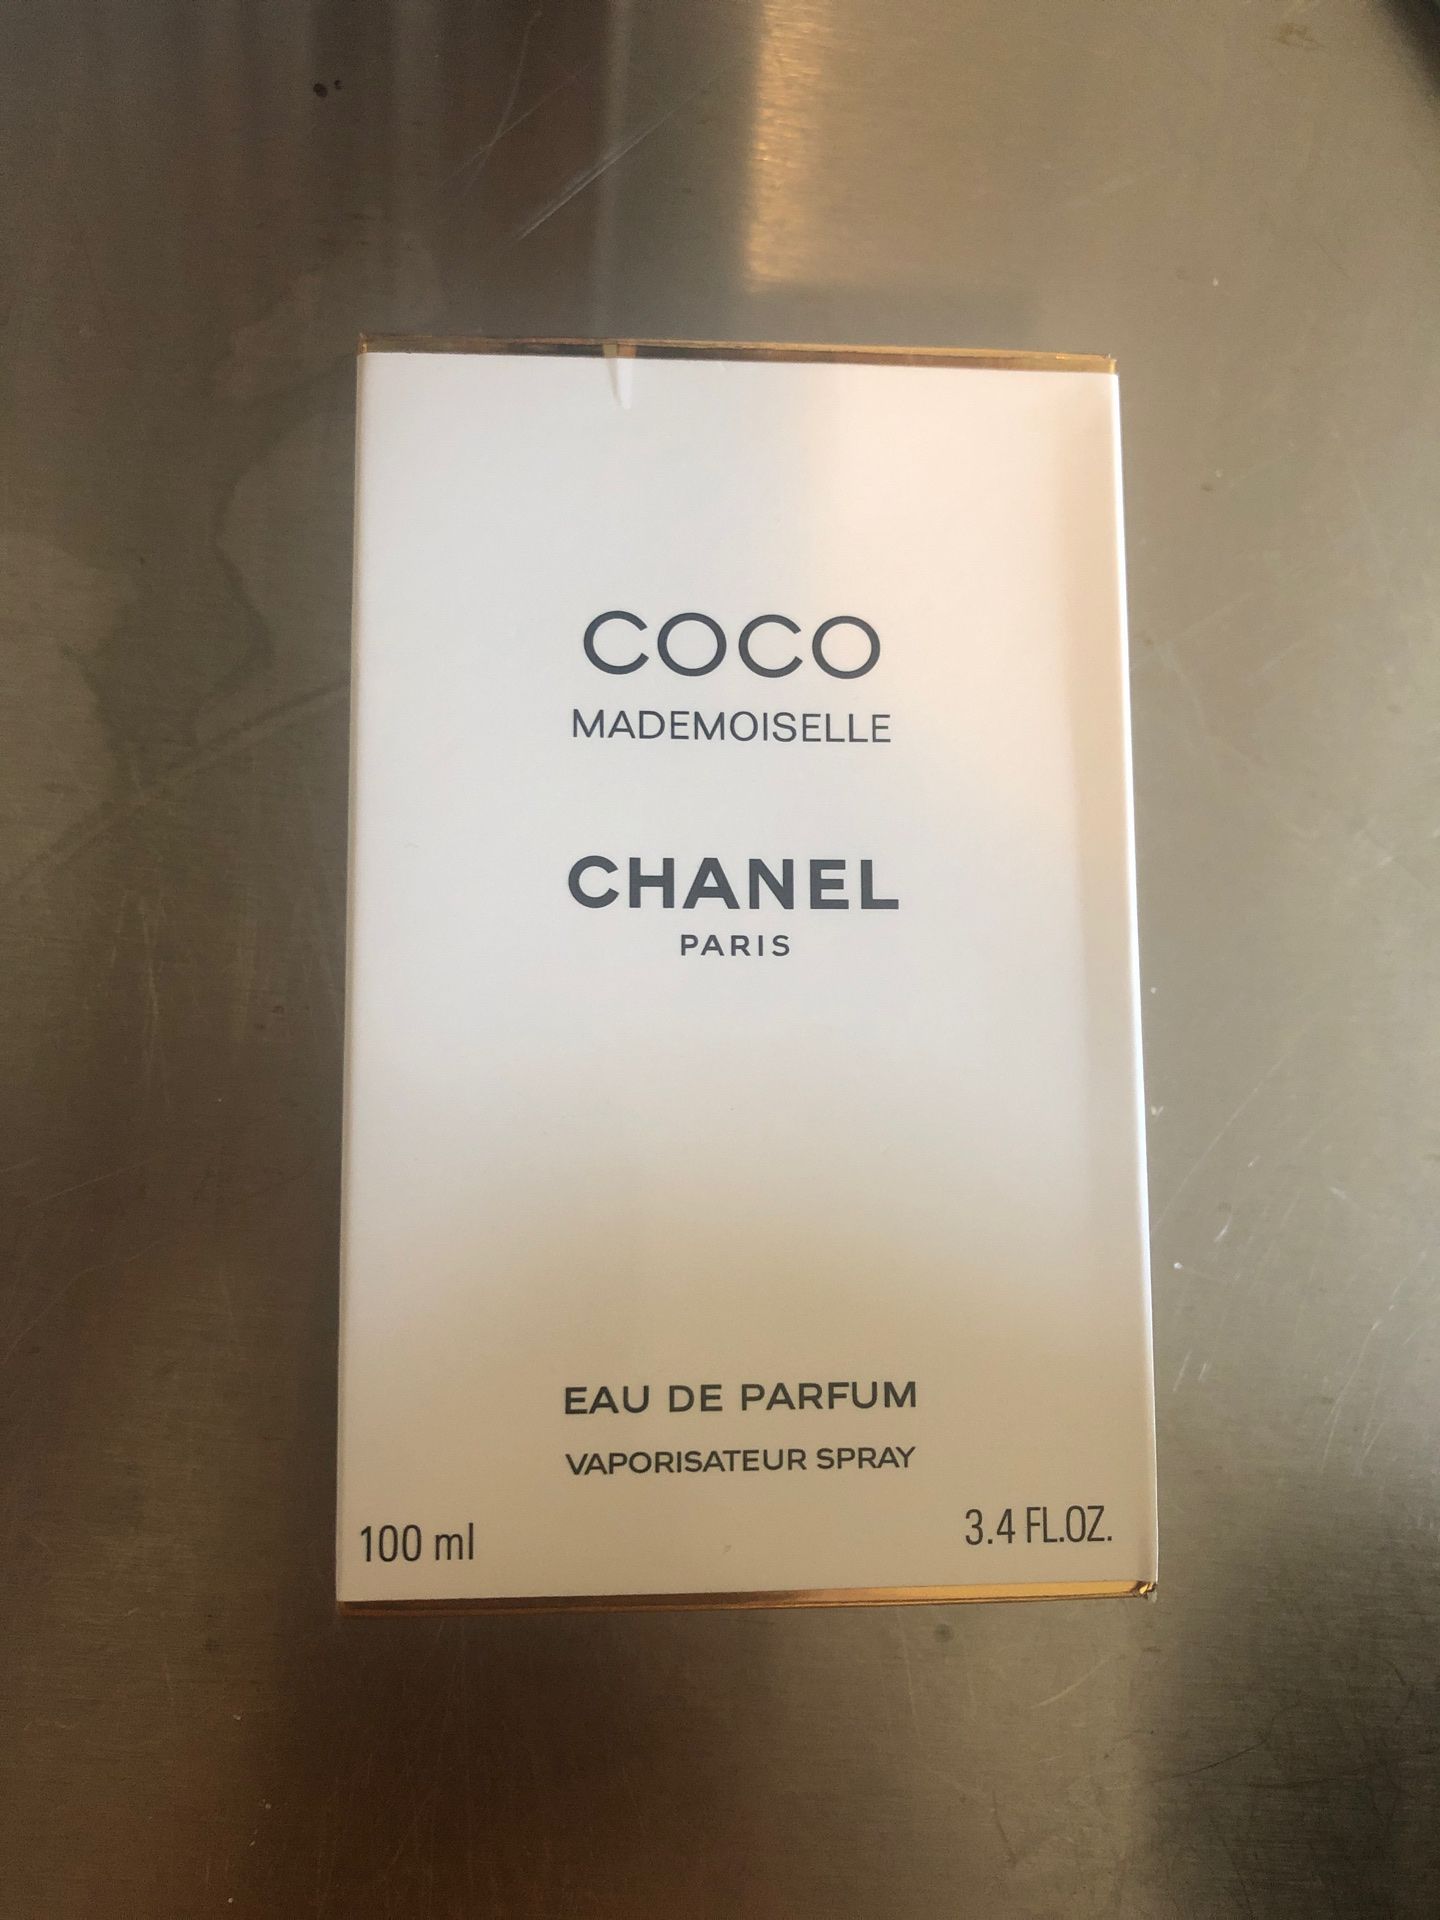 Coco Chanel mademoiselle perfume